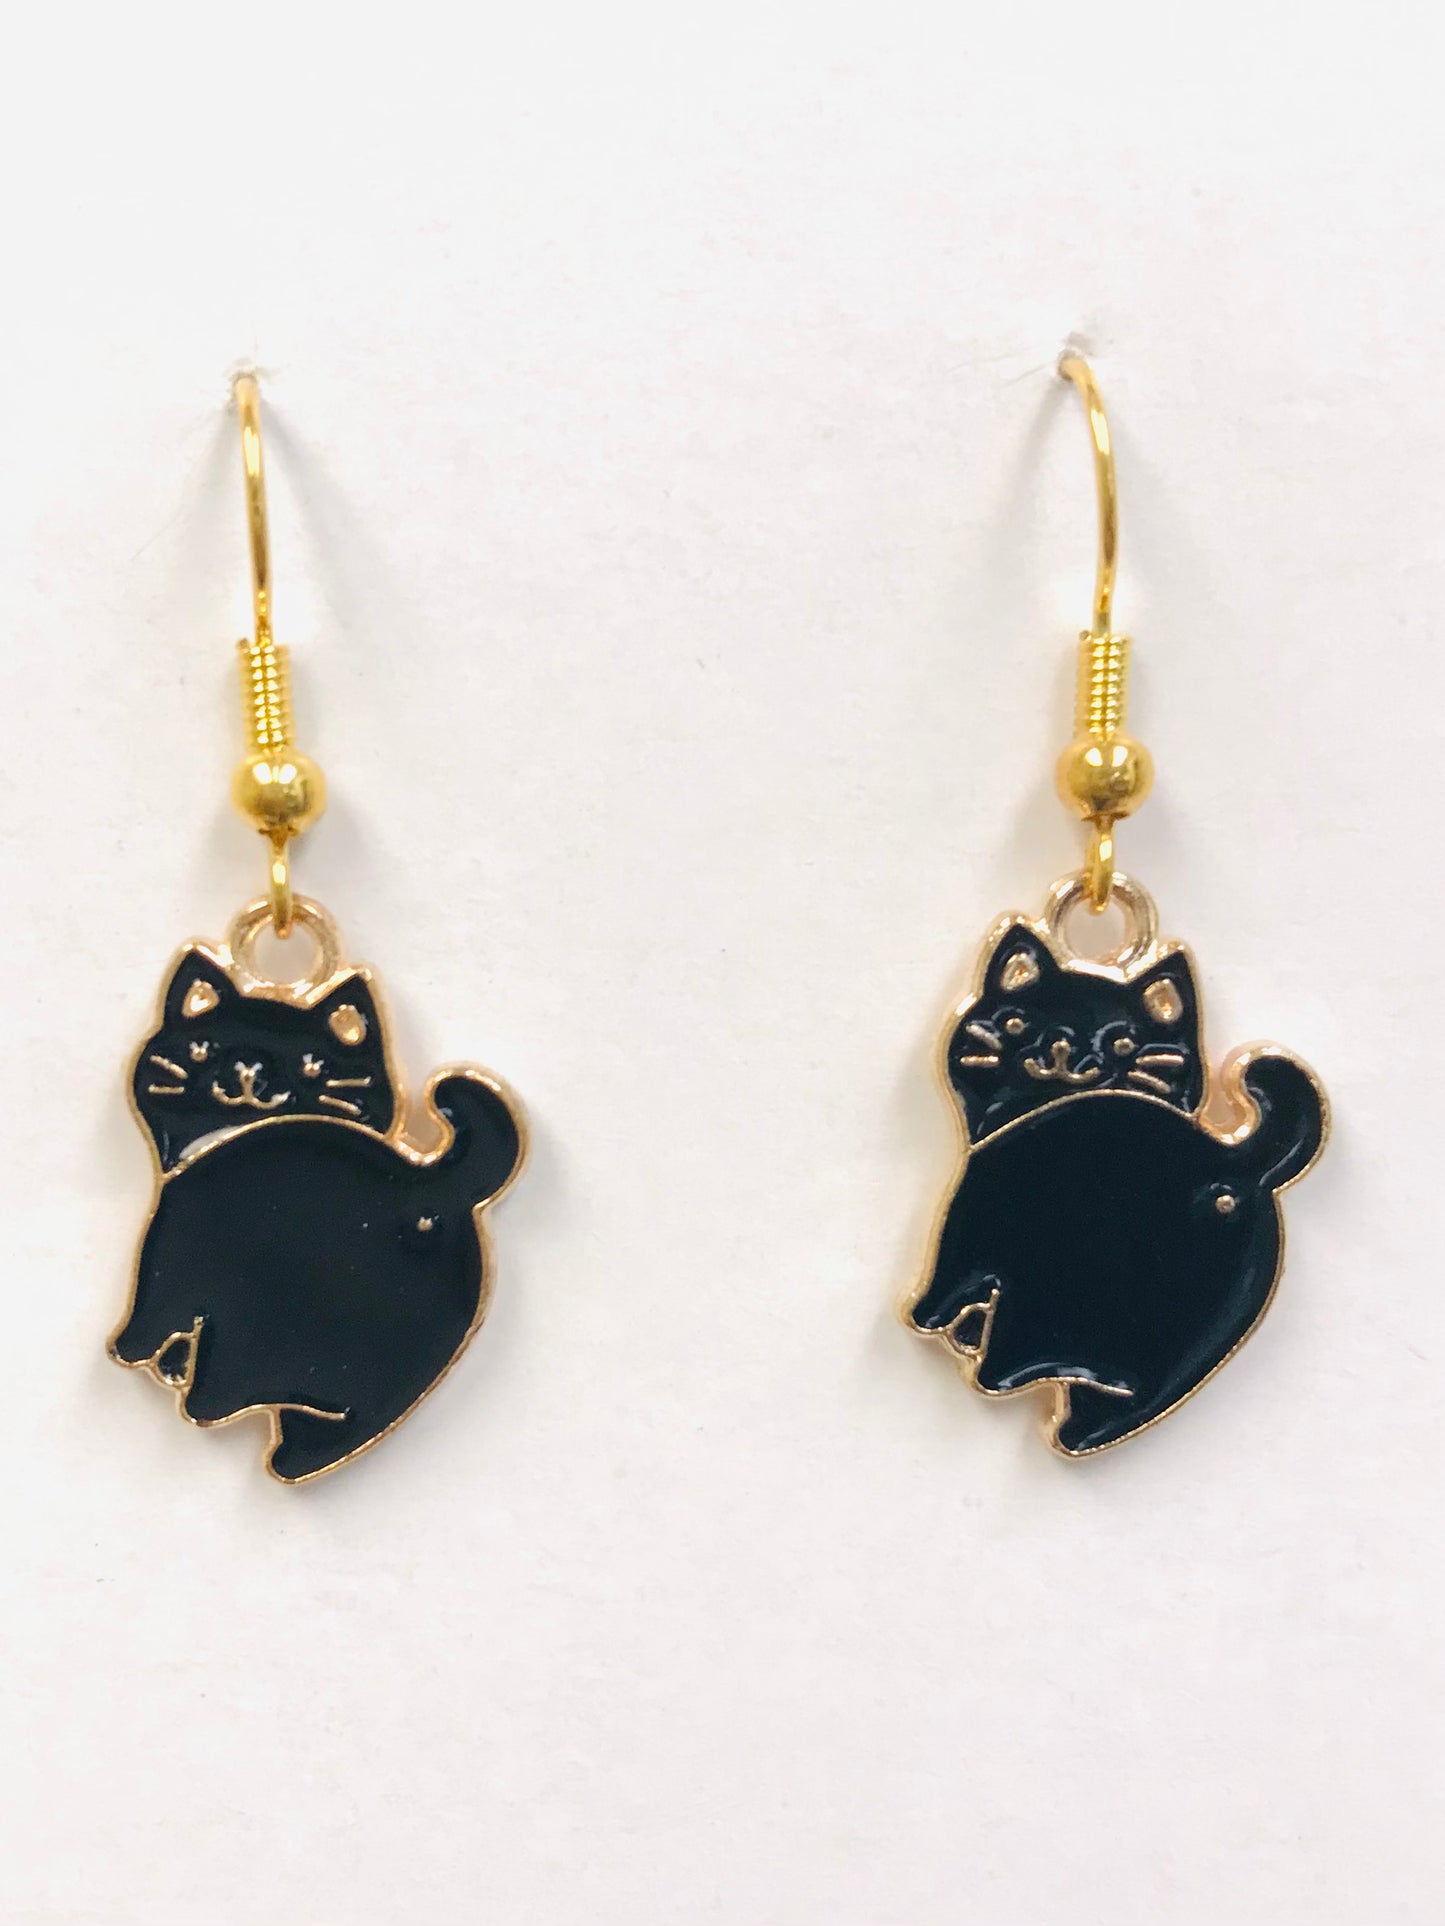 2pairs Black and White Cat Enamel Earrings